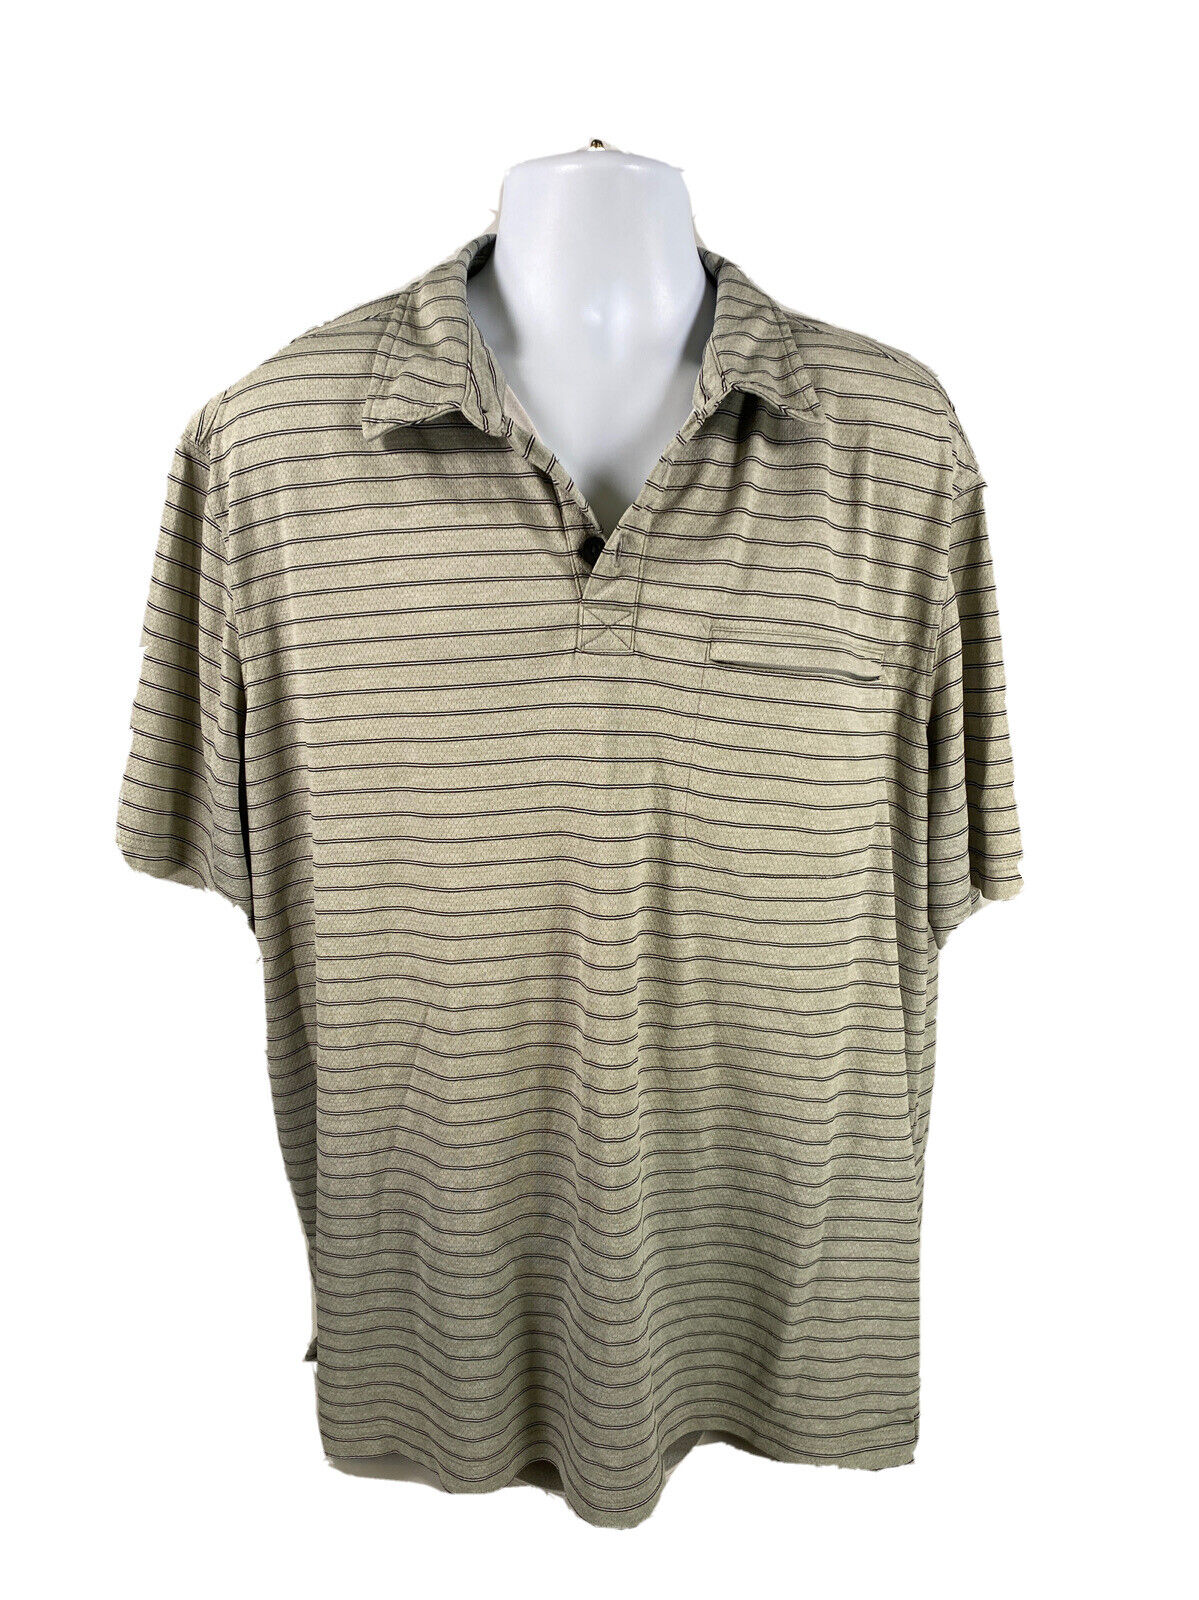 Duluth Trading Co Men's Gray Striped Polyester/Nylon Polo Shirt - XL